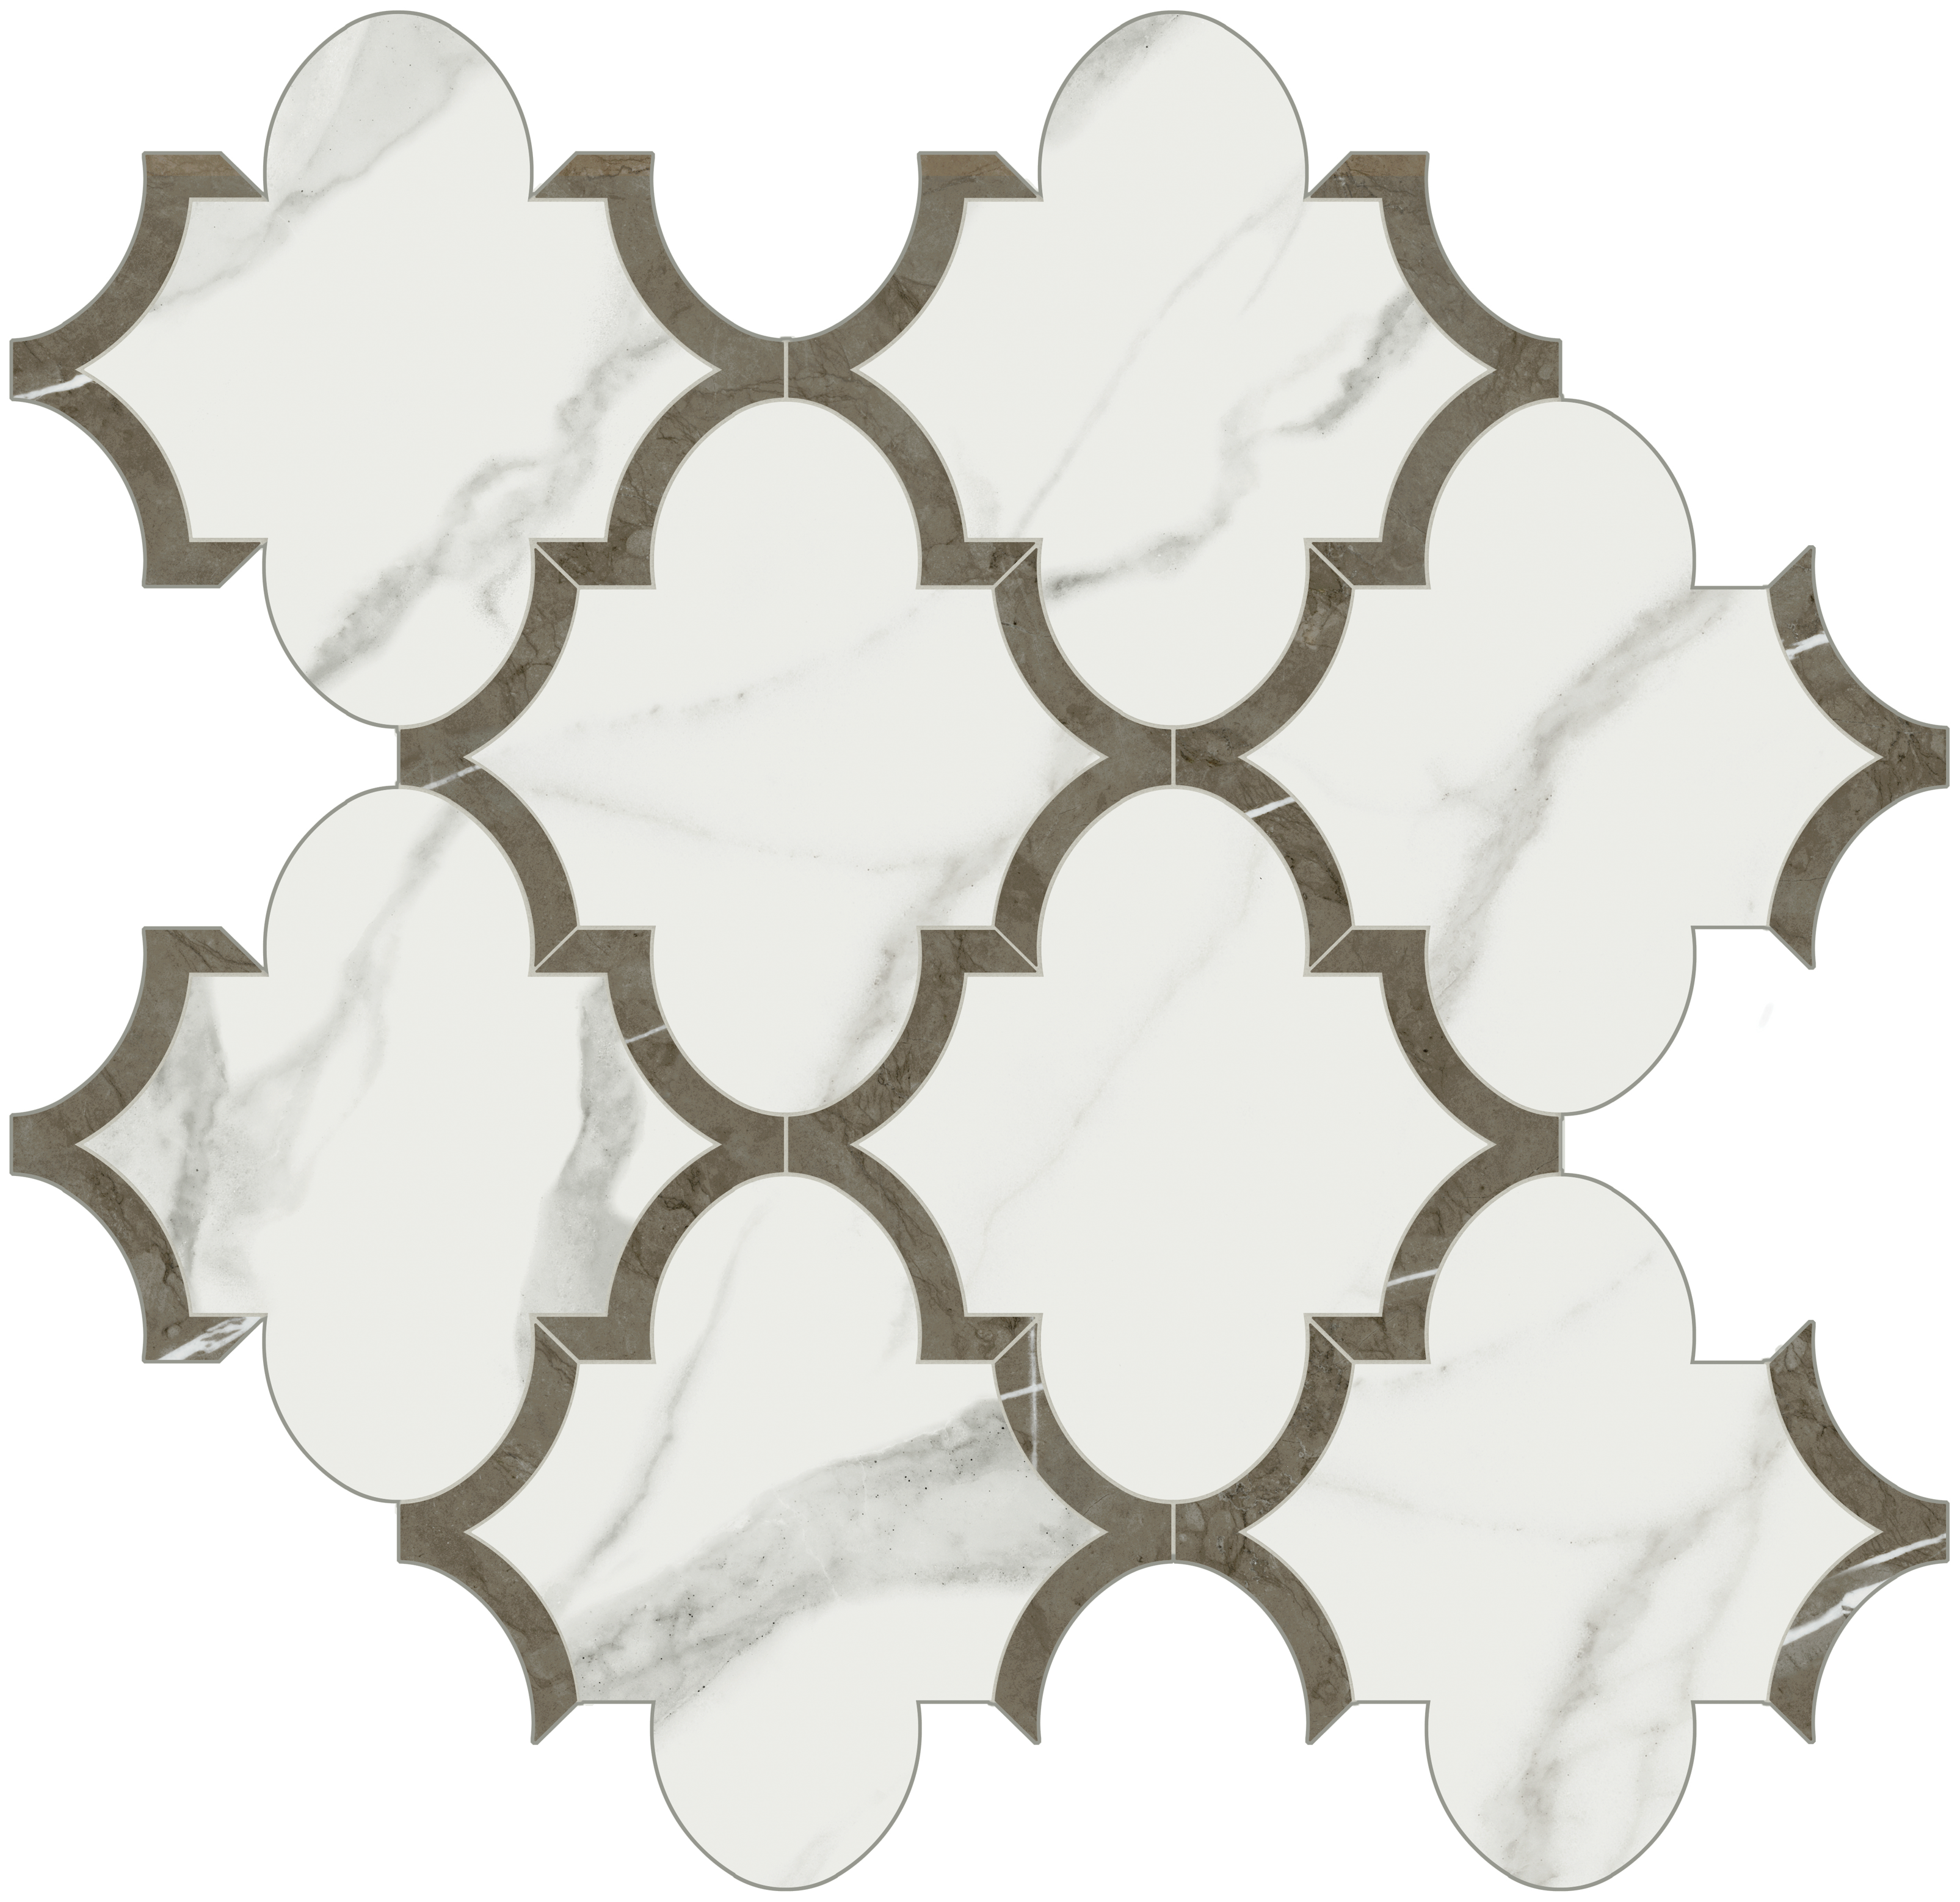 statuario venato arabesque pattern glazed porcelain mosaic from mayfair anatolia collection distributed by surface group international polished finish straight edge edge mesh shape